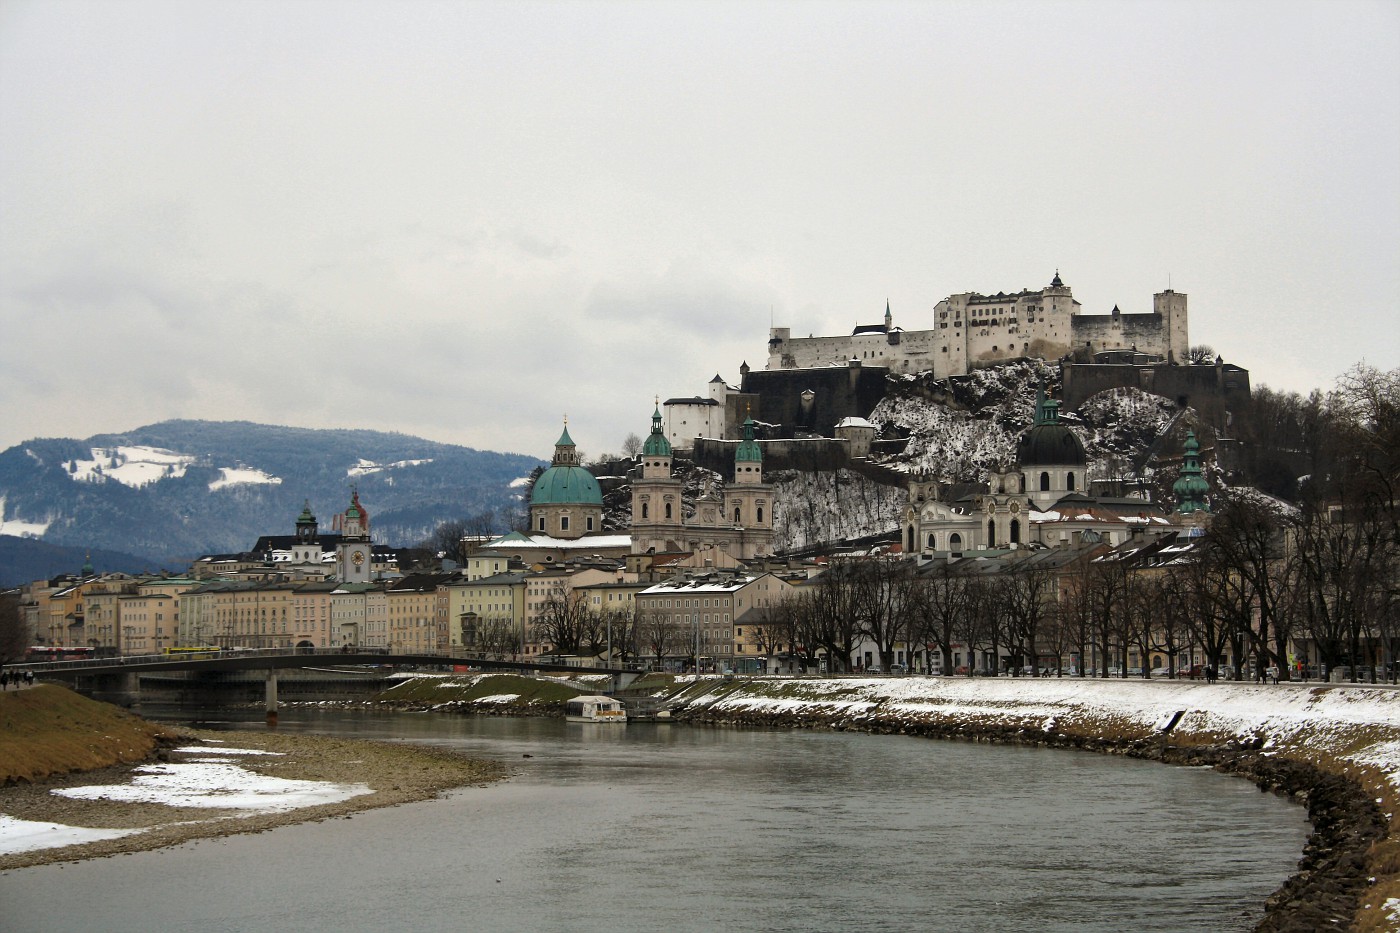 http://images19.fotki.com/v276/photos/2/243162/8488810/Salzburg2-vi.jpg